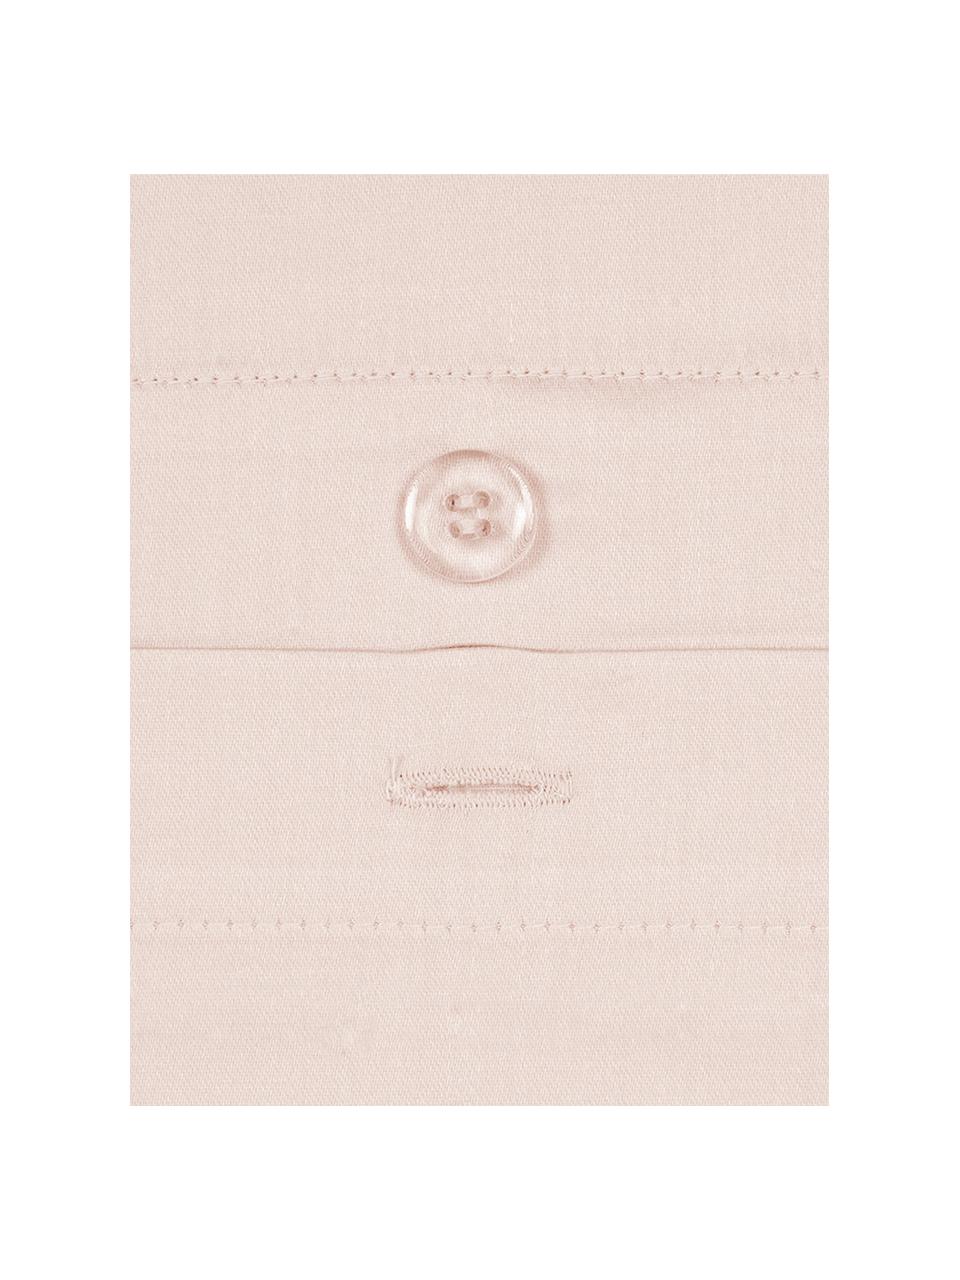 Baumwollsatin-Kissenbezug Premium in Rosa mit Stehsaum, 65 x 100 cm, Webart: Satin, leicht glänzend Fa, Rosa, B 65 x L 100 cm